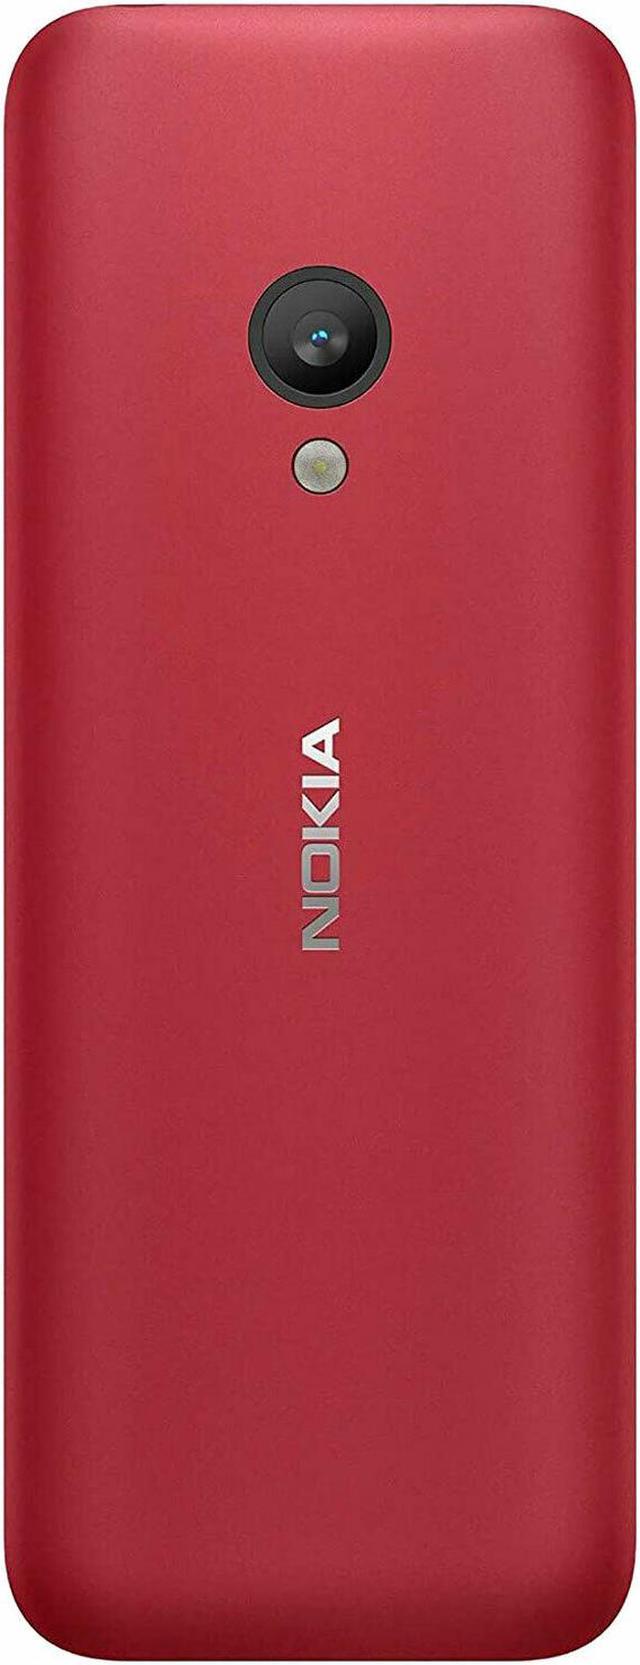 Nokia 150 (2020) Only Factory Cell-Phone CDMA) Dual-SIM - 4MB 2G (GSM Unlocked | (Red) International Version No